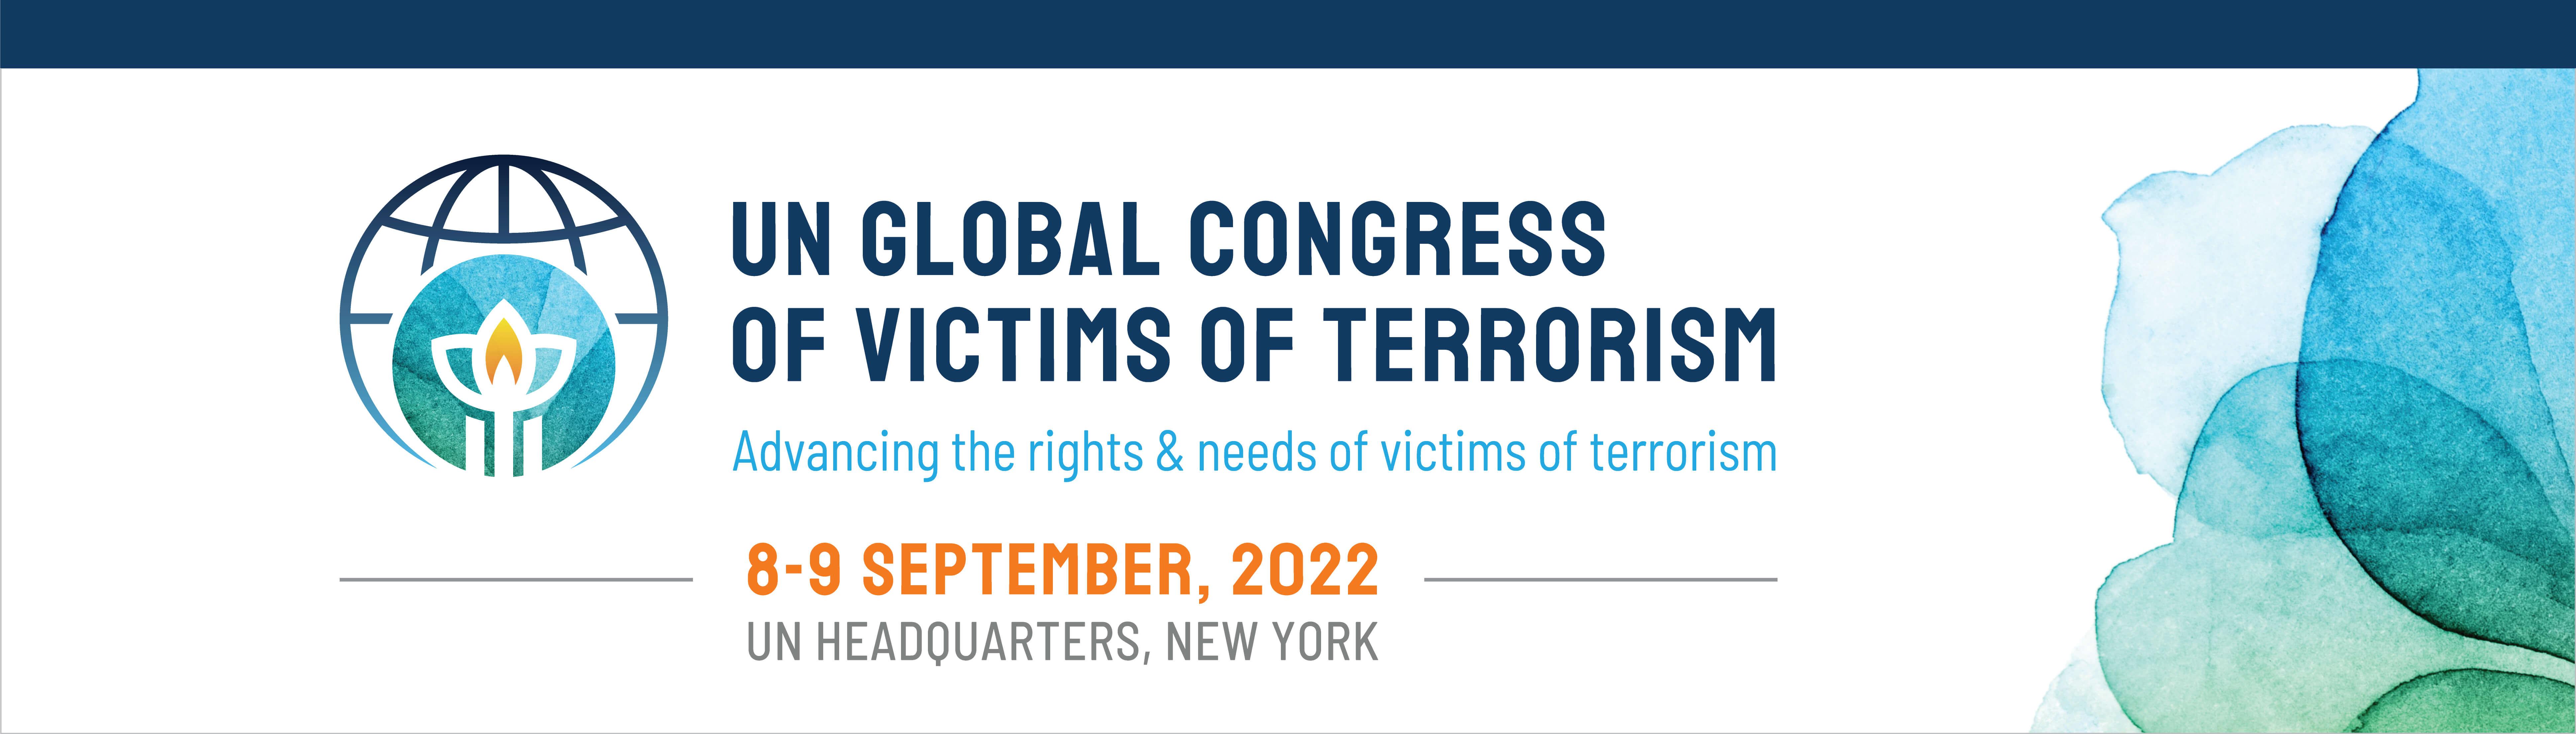 2022 UN Global Congress of Victims of Terrorism | Контртеррористическое  управление ООН